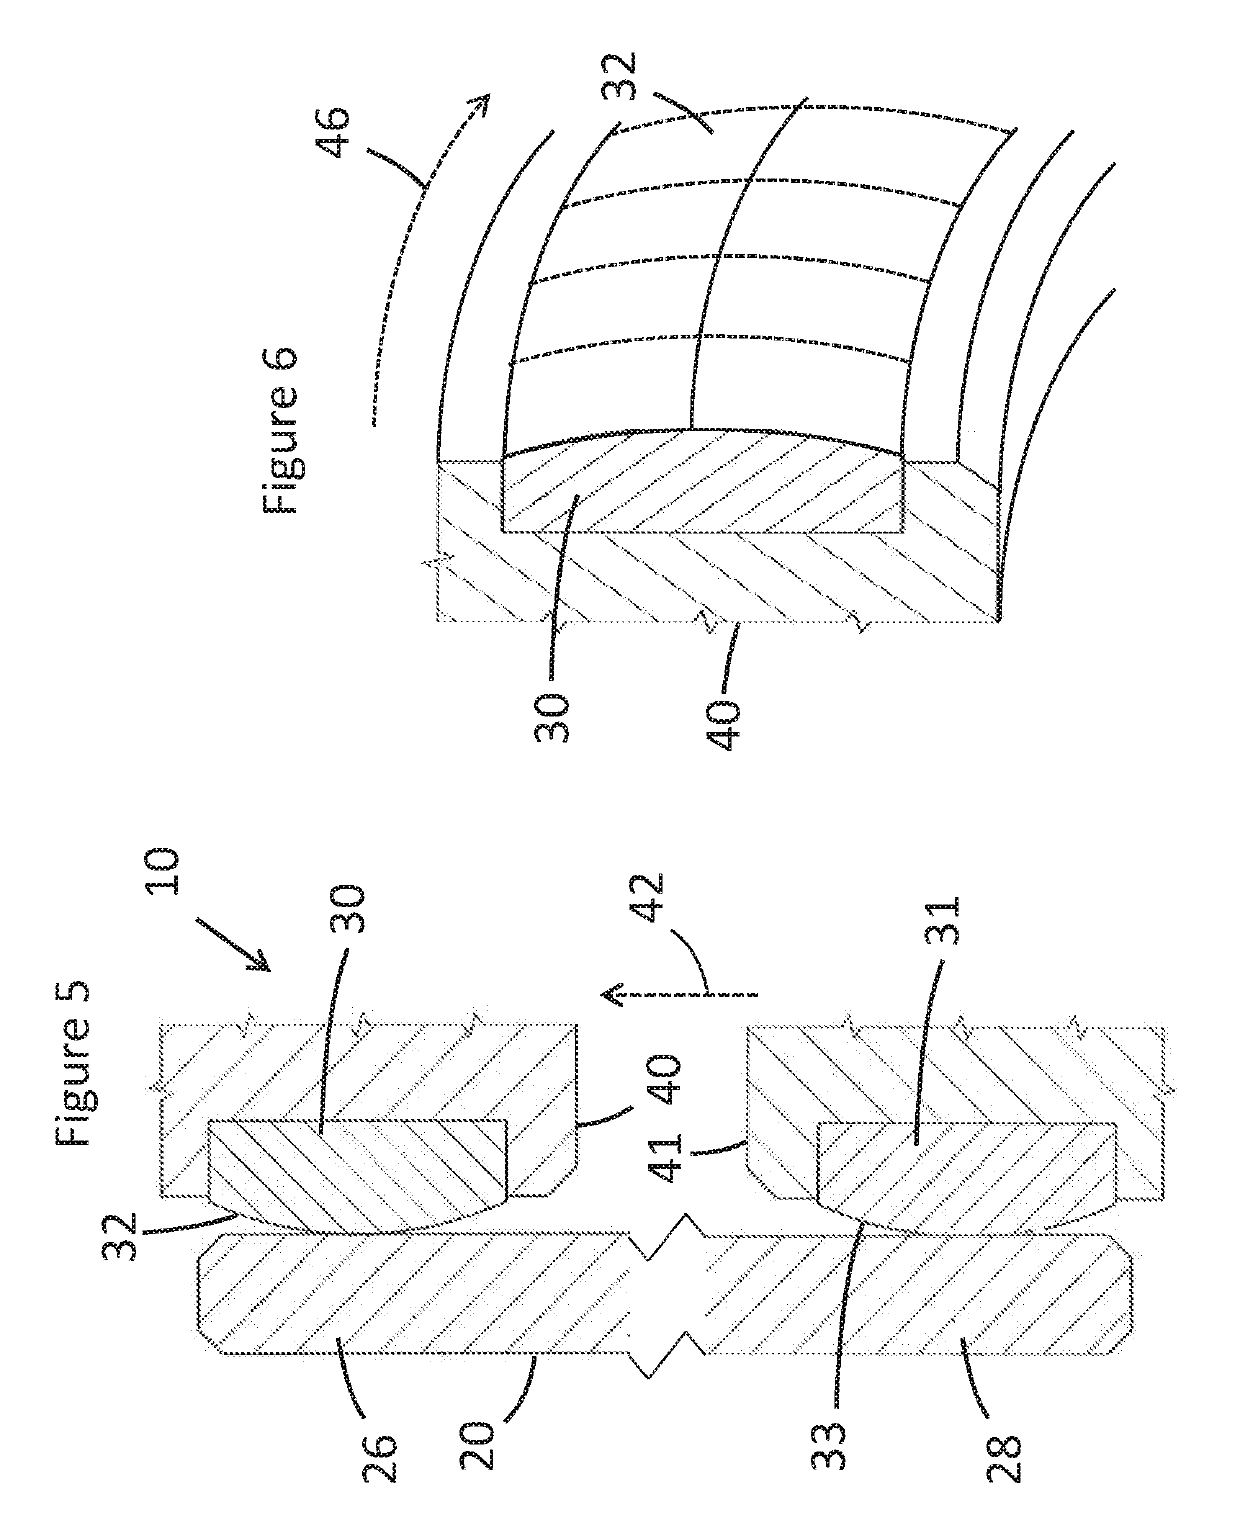 Gas turbine membrane seal